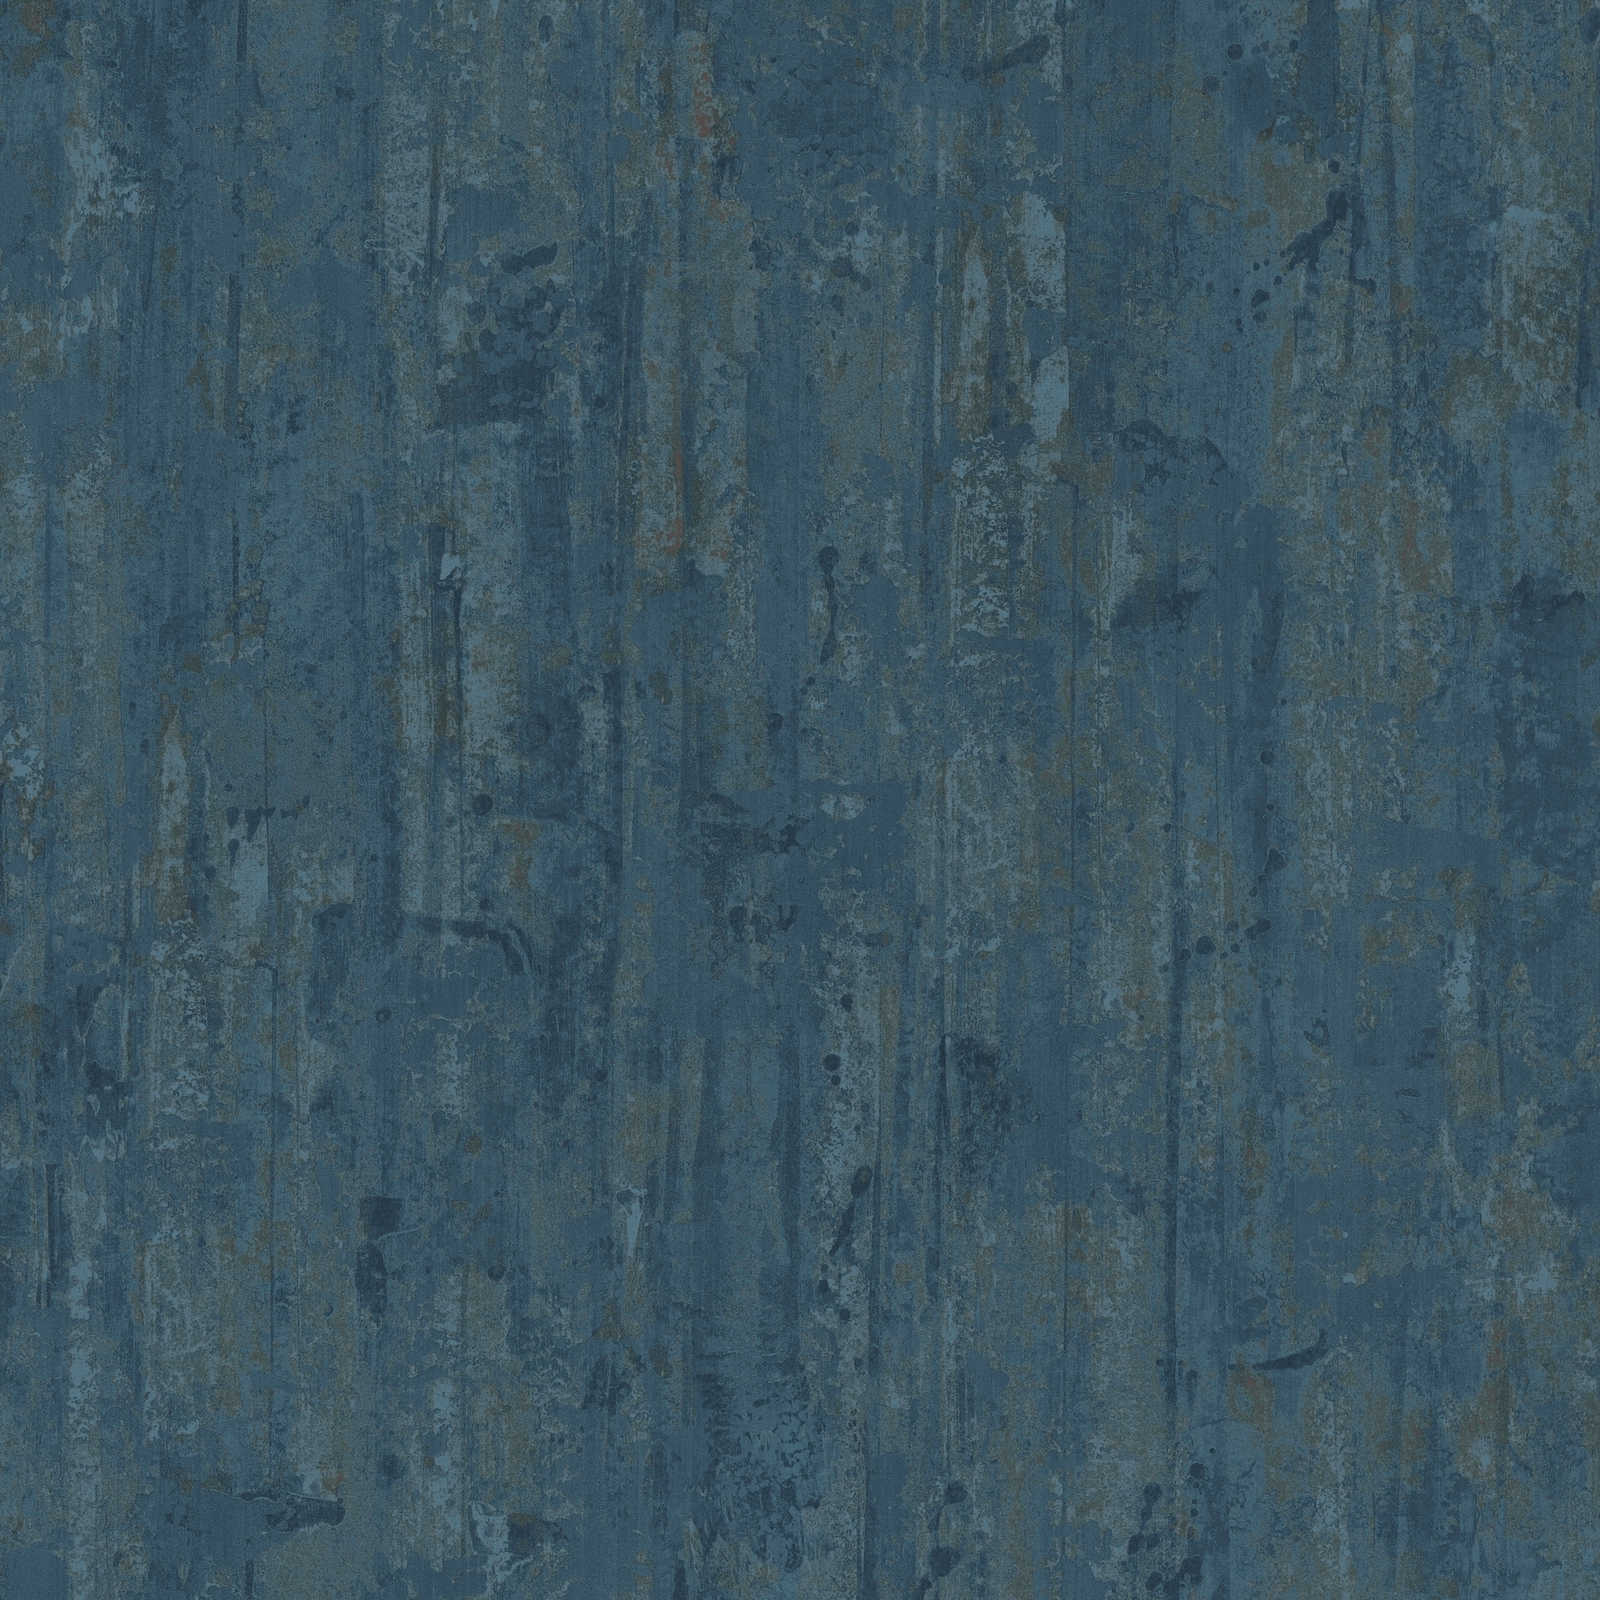         Ethno Tapete mit Strukturmuster in Holzoptik – Blau
    